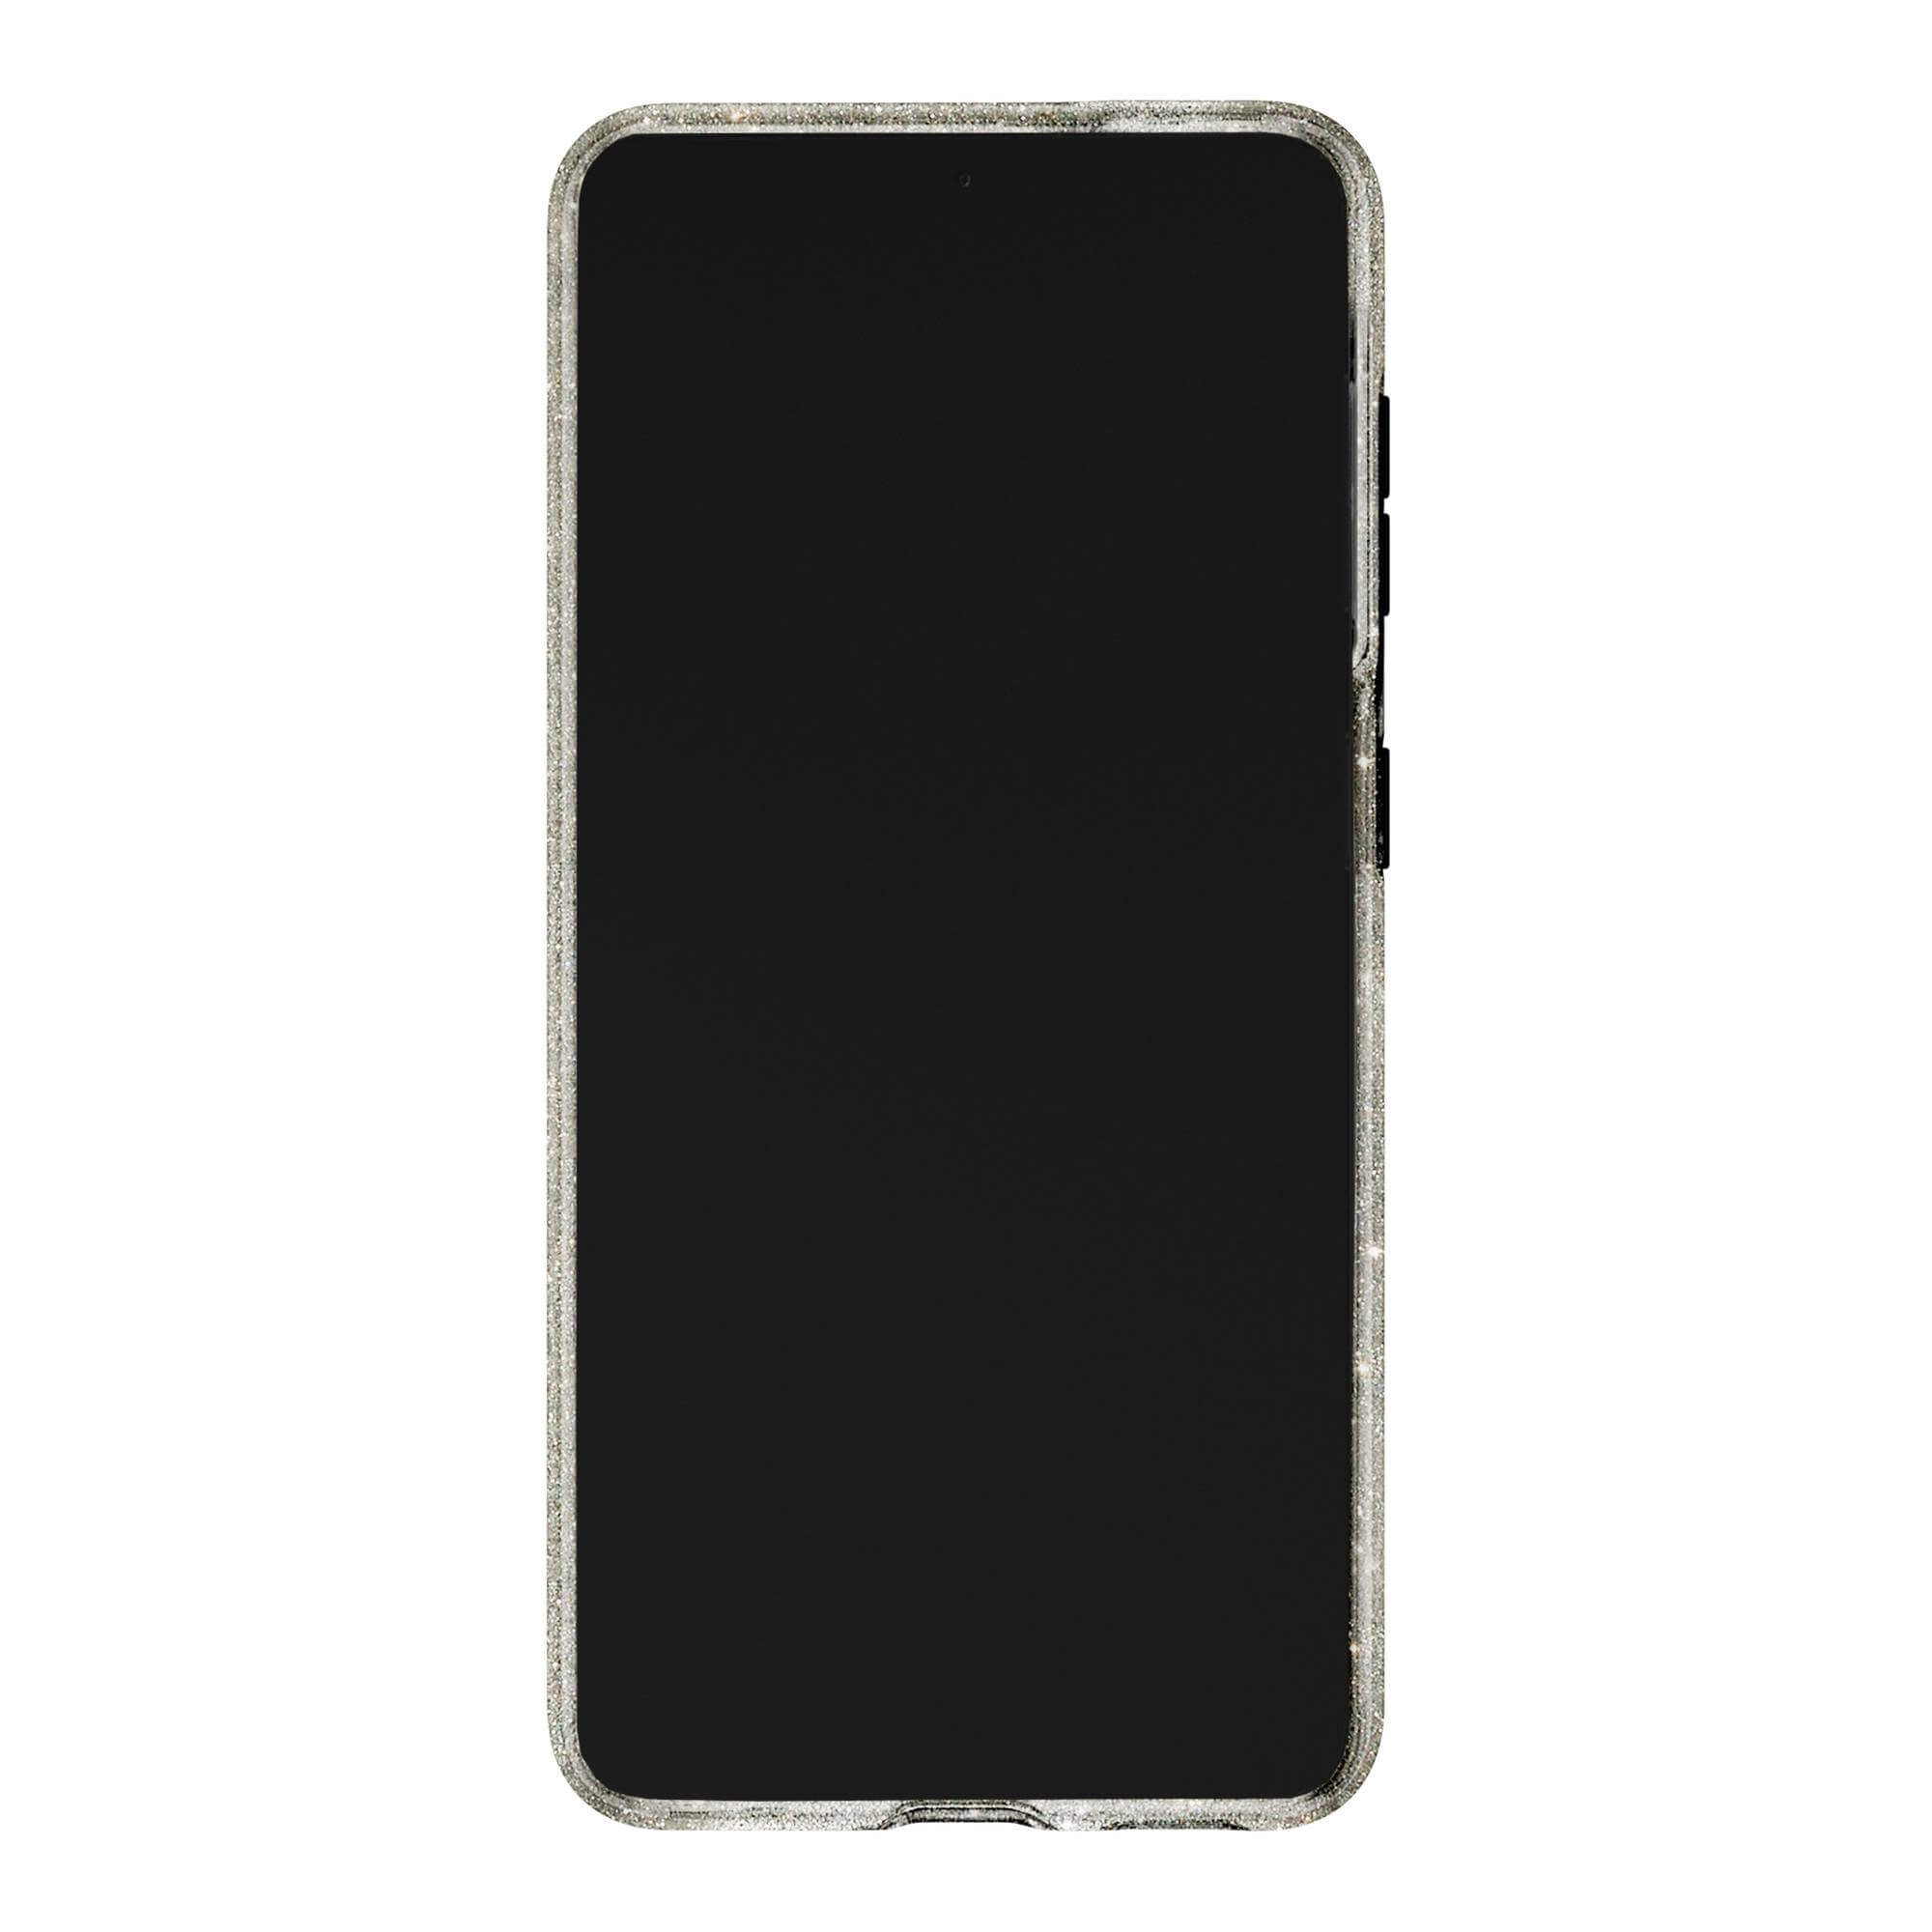 SKECH Sparkle, Backcover, Samsung, snow Galaxy S22+ - transparent 5G, spark